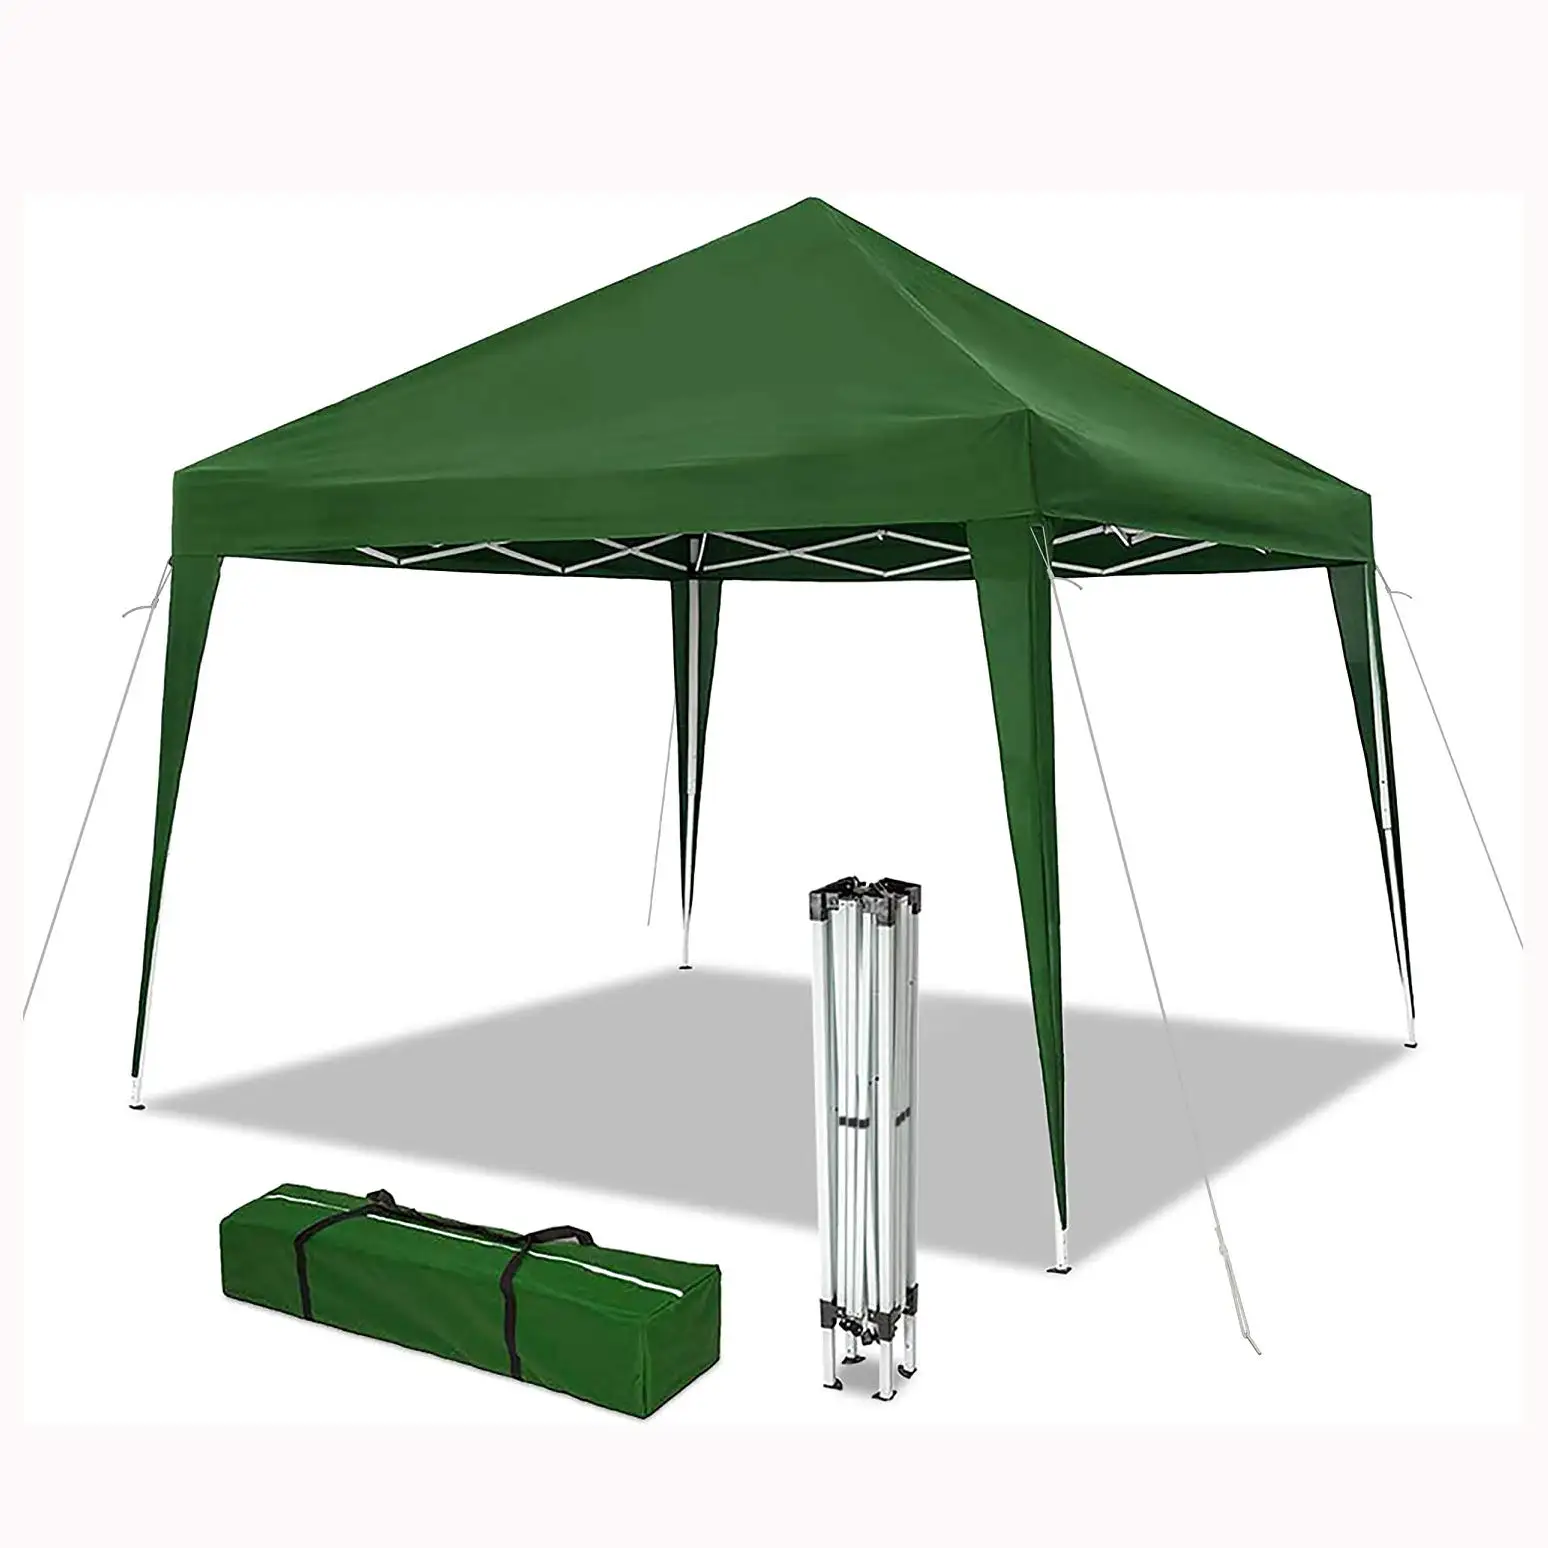 Hot selling 2x2 or 3x3 wholesale folding metal tent garden canopy outdoor gazebo